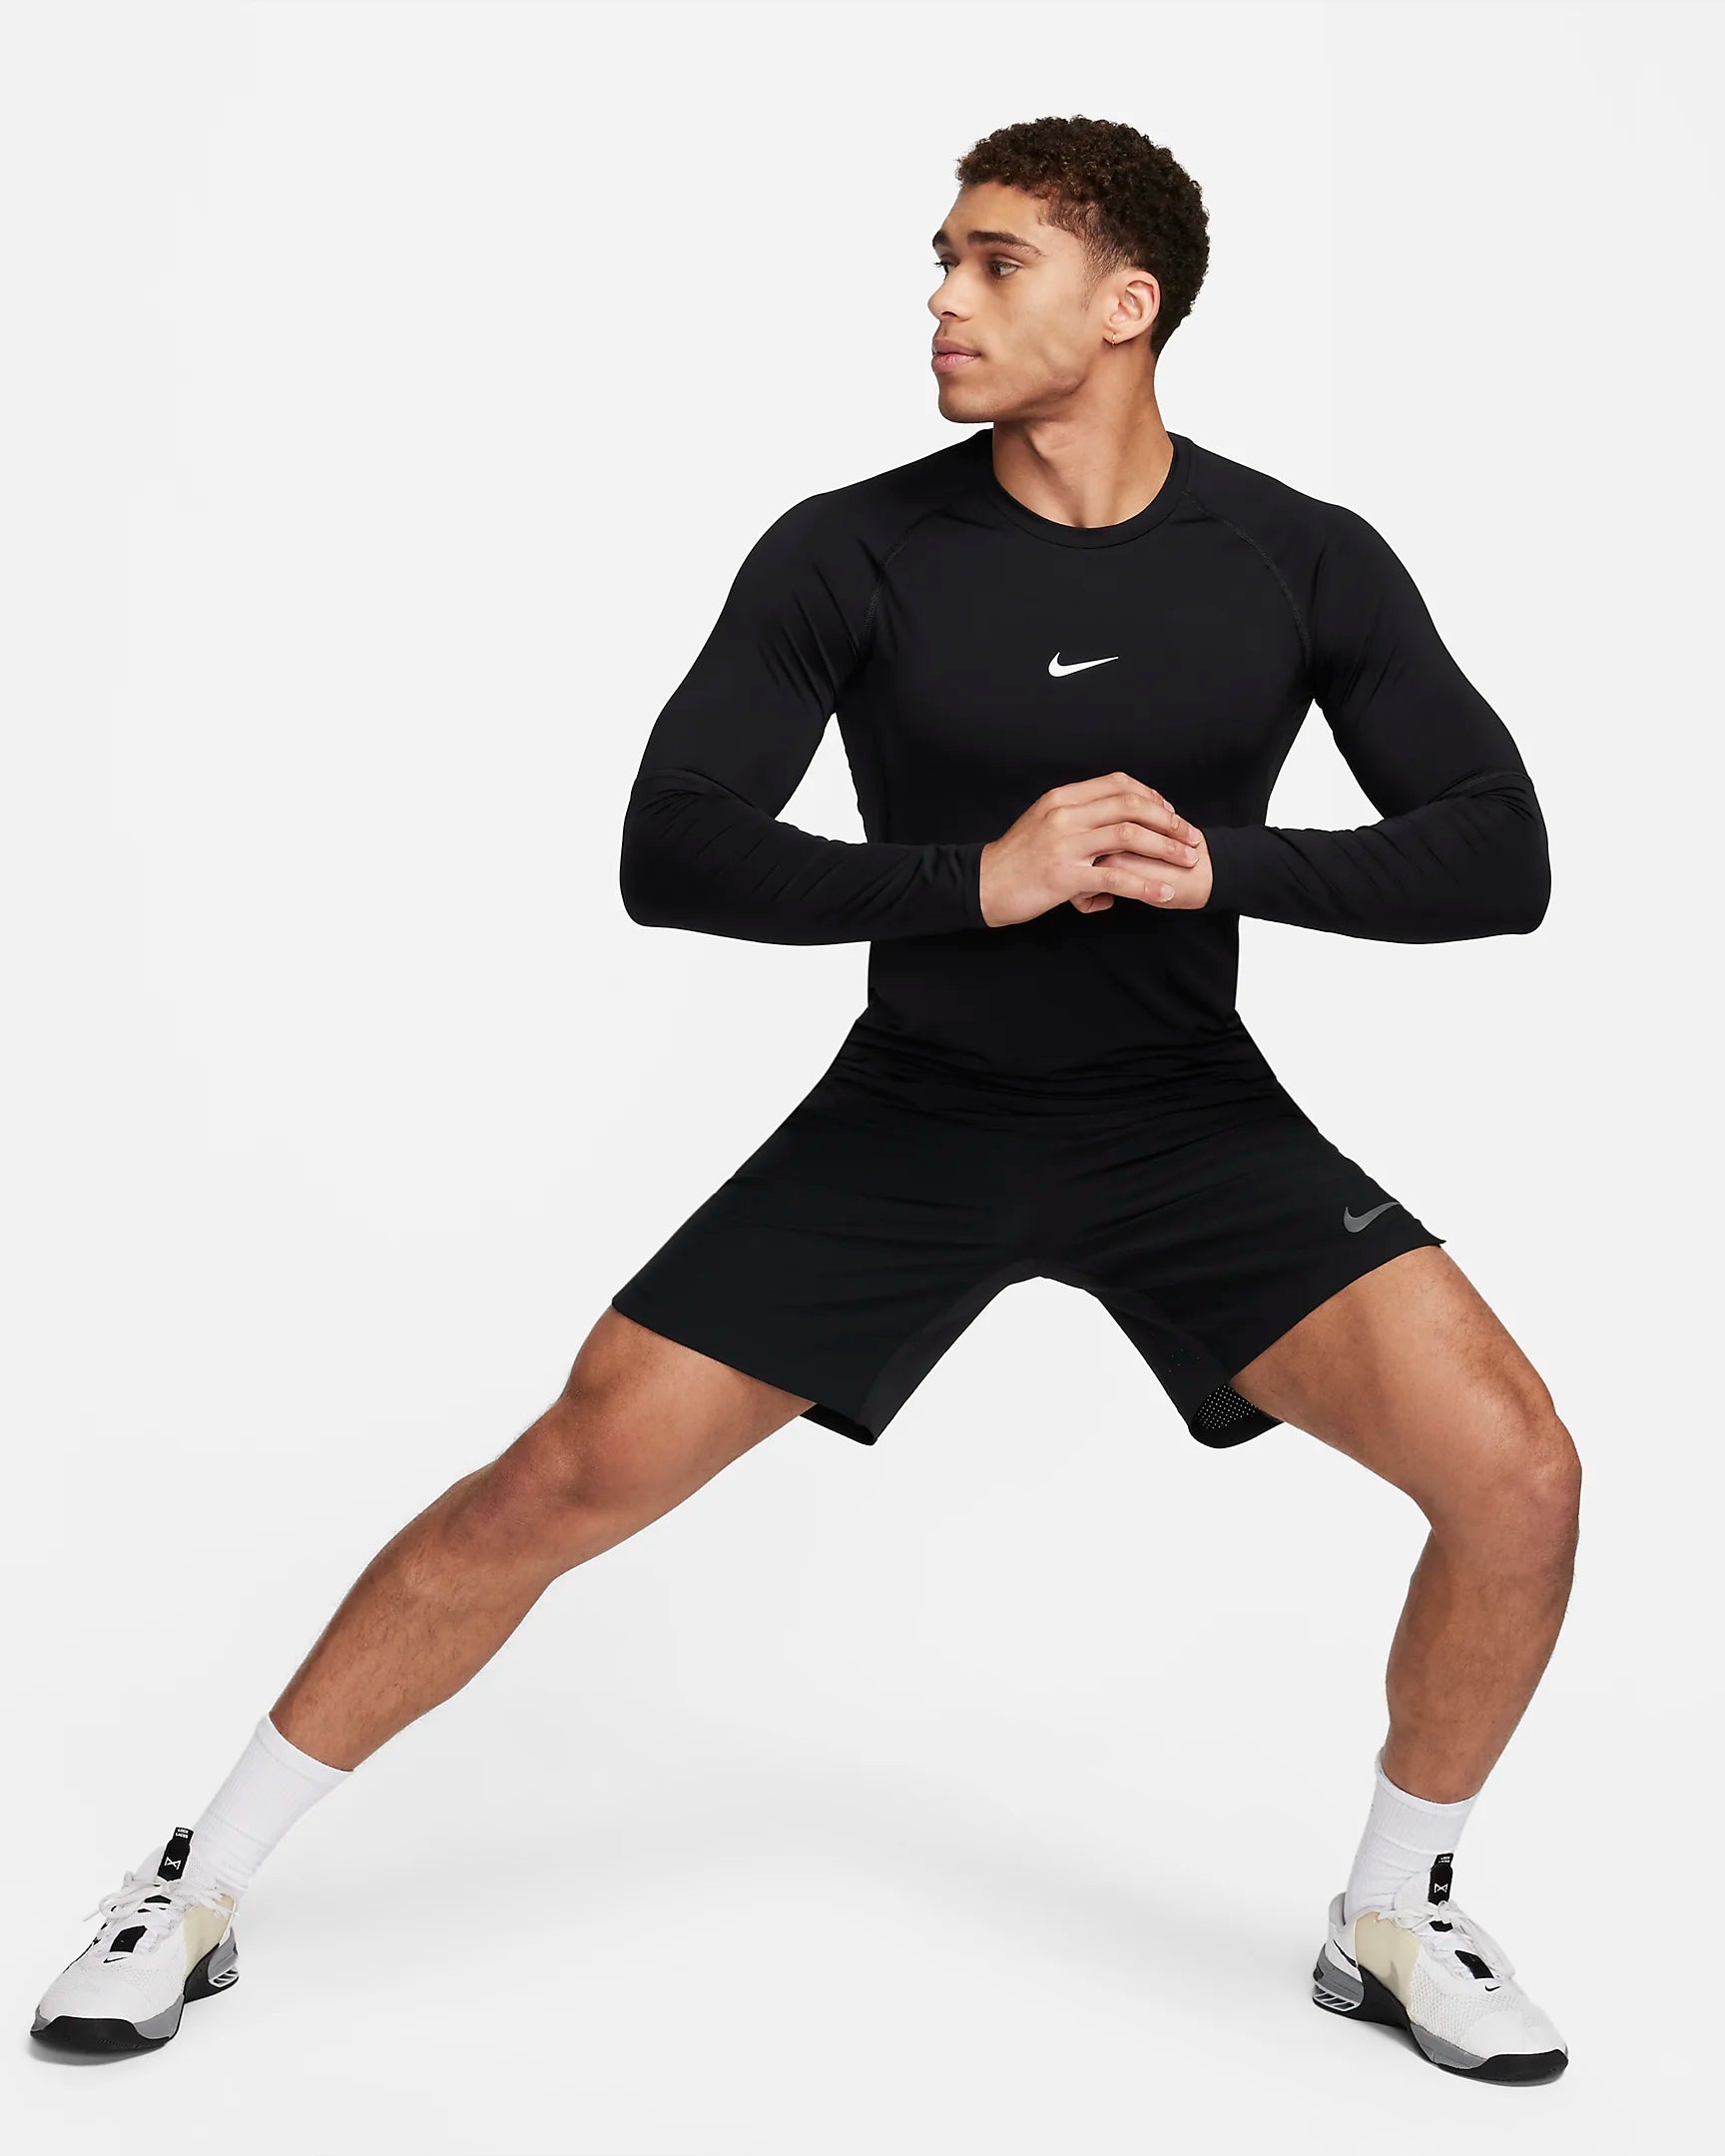 Nike Pro Men's Dri-FIT Tight Long-Sleeve Fitness Top.